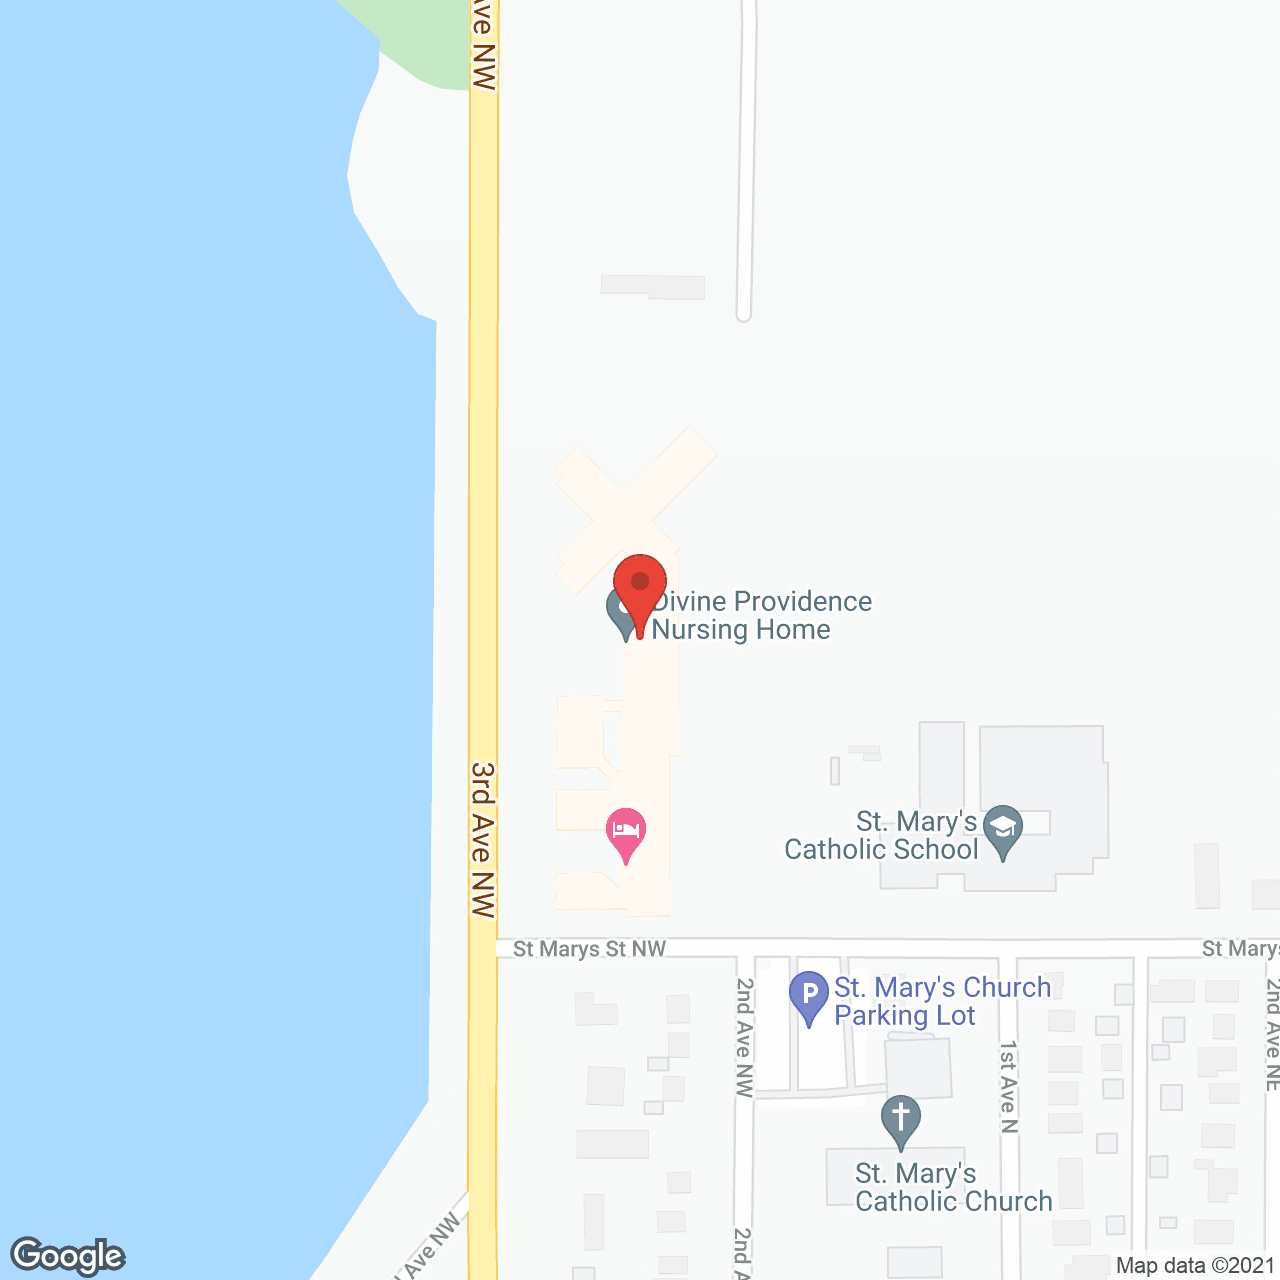 Divine Providence Nursing Home in google map